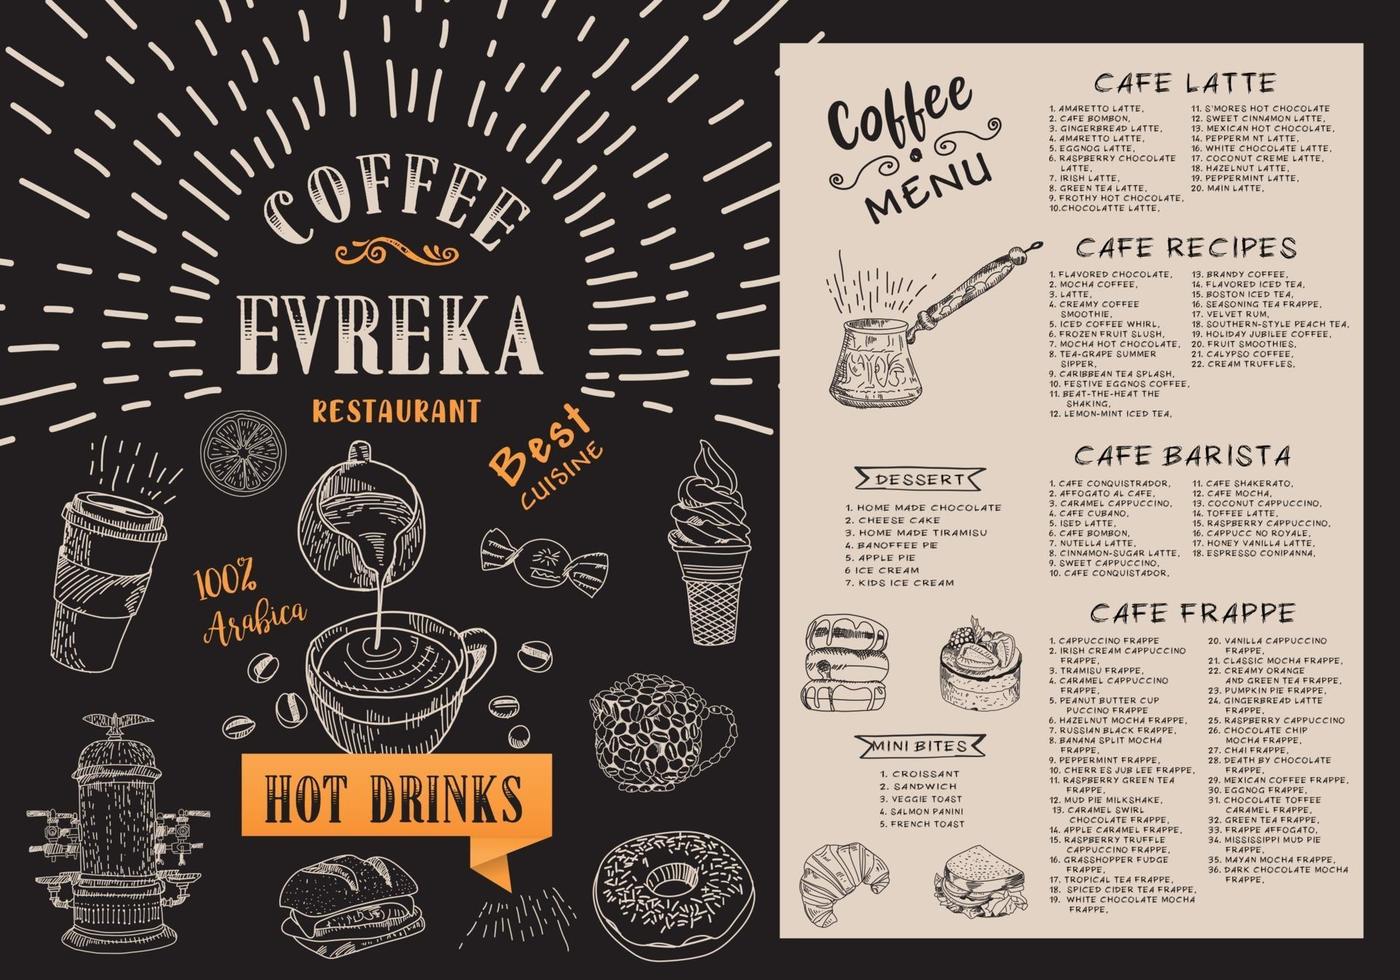 coffee house menu restaurant cafe menu free vector